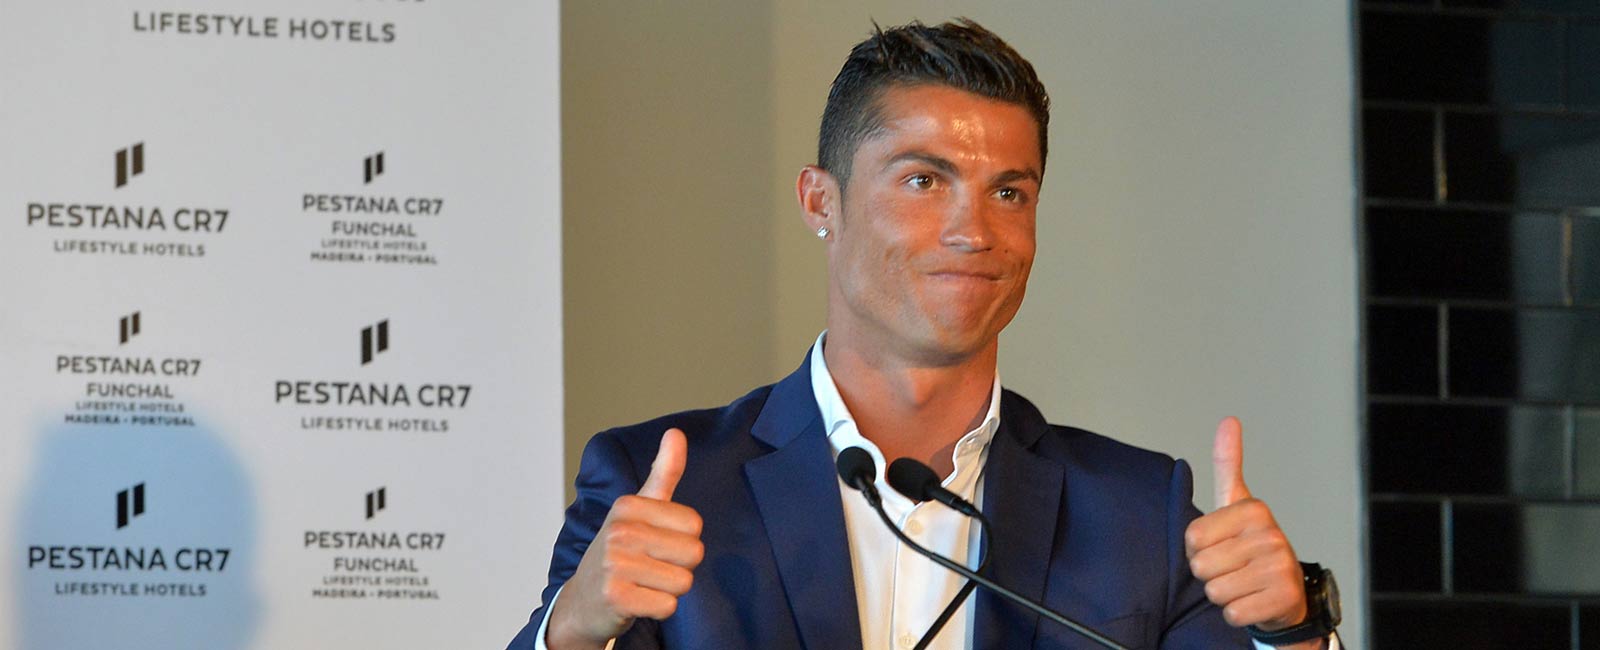 Cristiano Ronaldo inaugura su hotel en Madeira